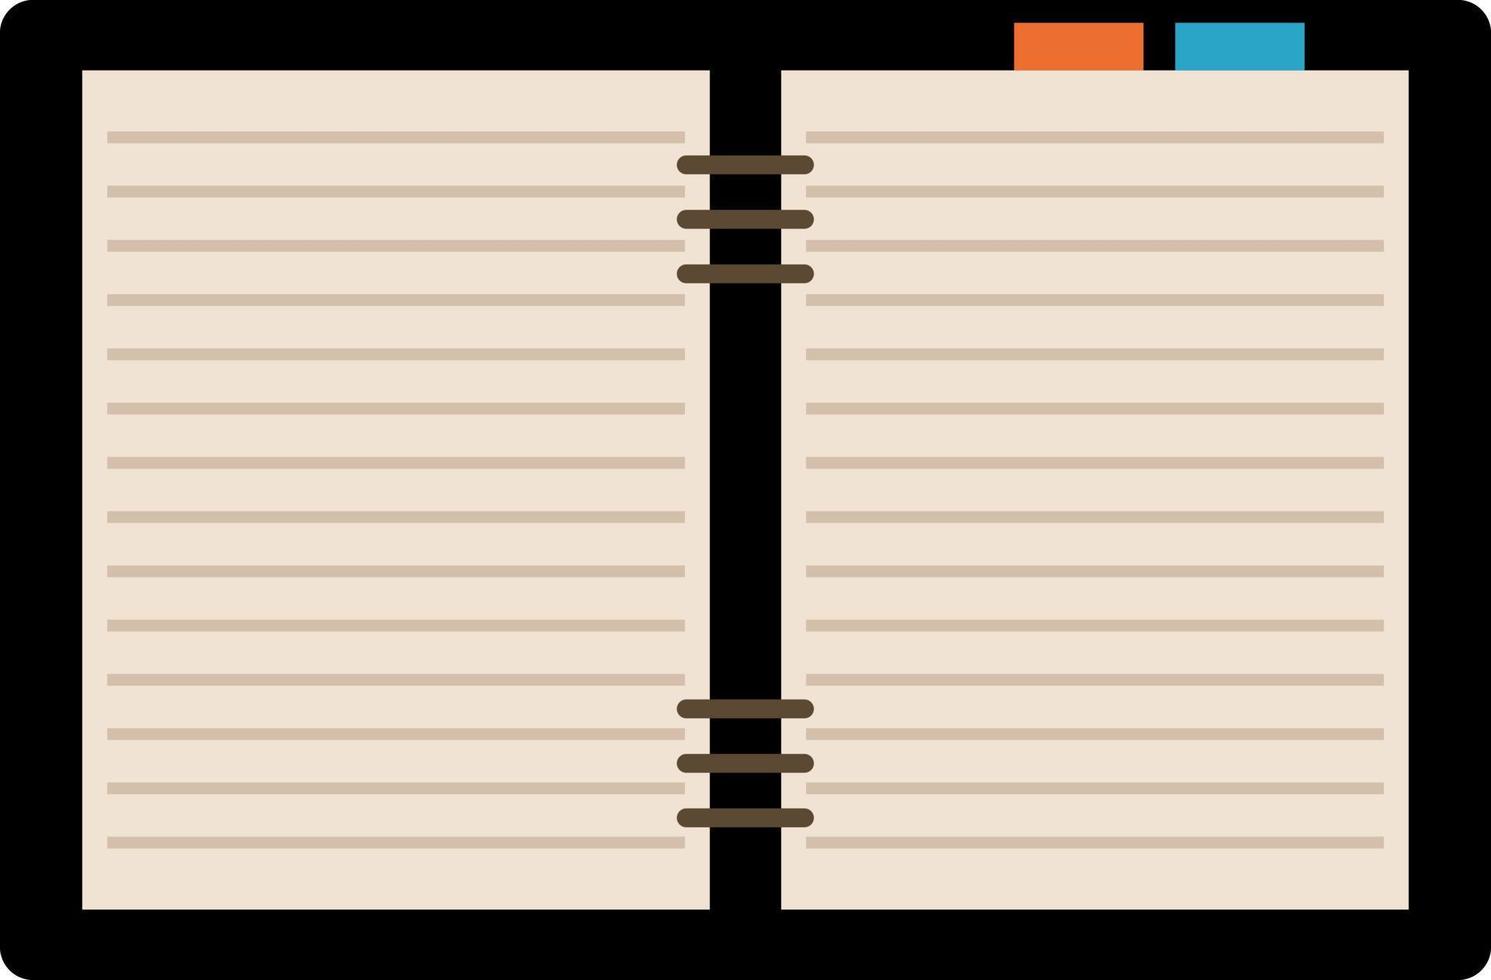 Vector Image Of An Open Notebook